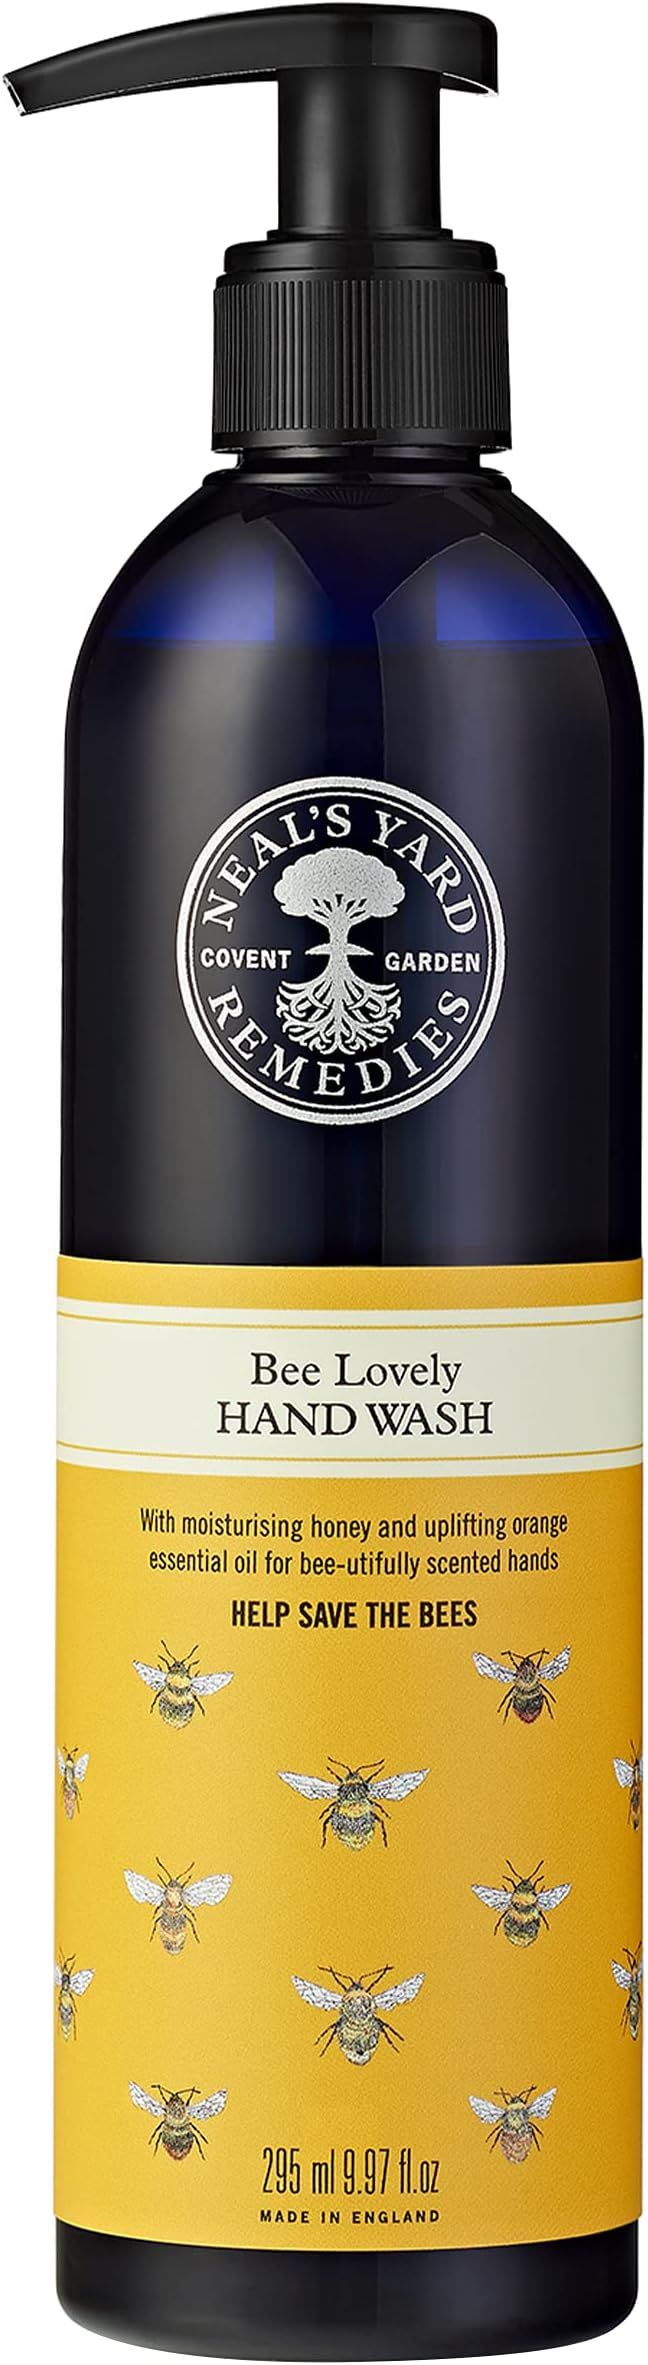 Neal's Yard Remedies Bee Lovely Hand Wash, 295 ml | Amazon (UK)